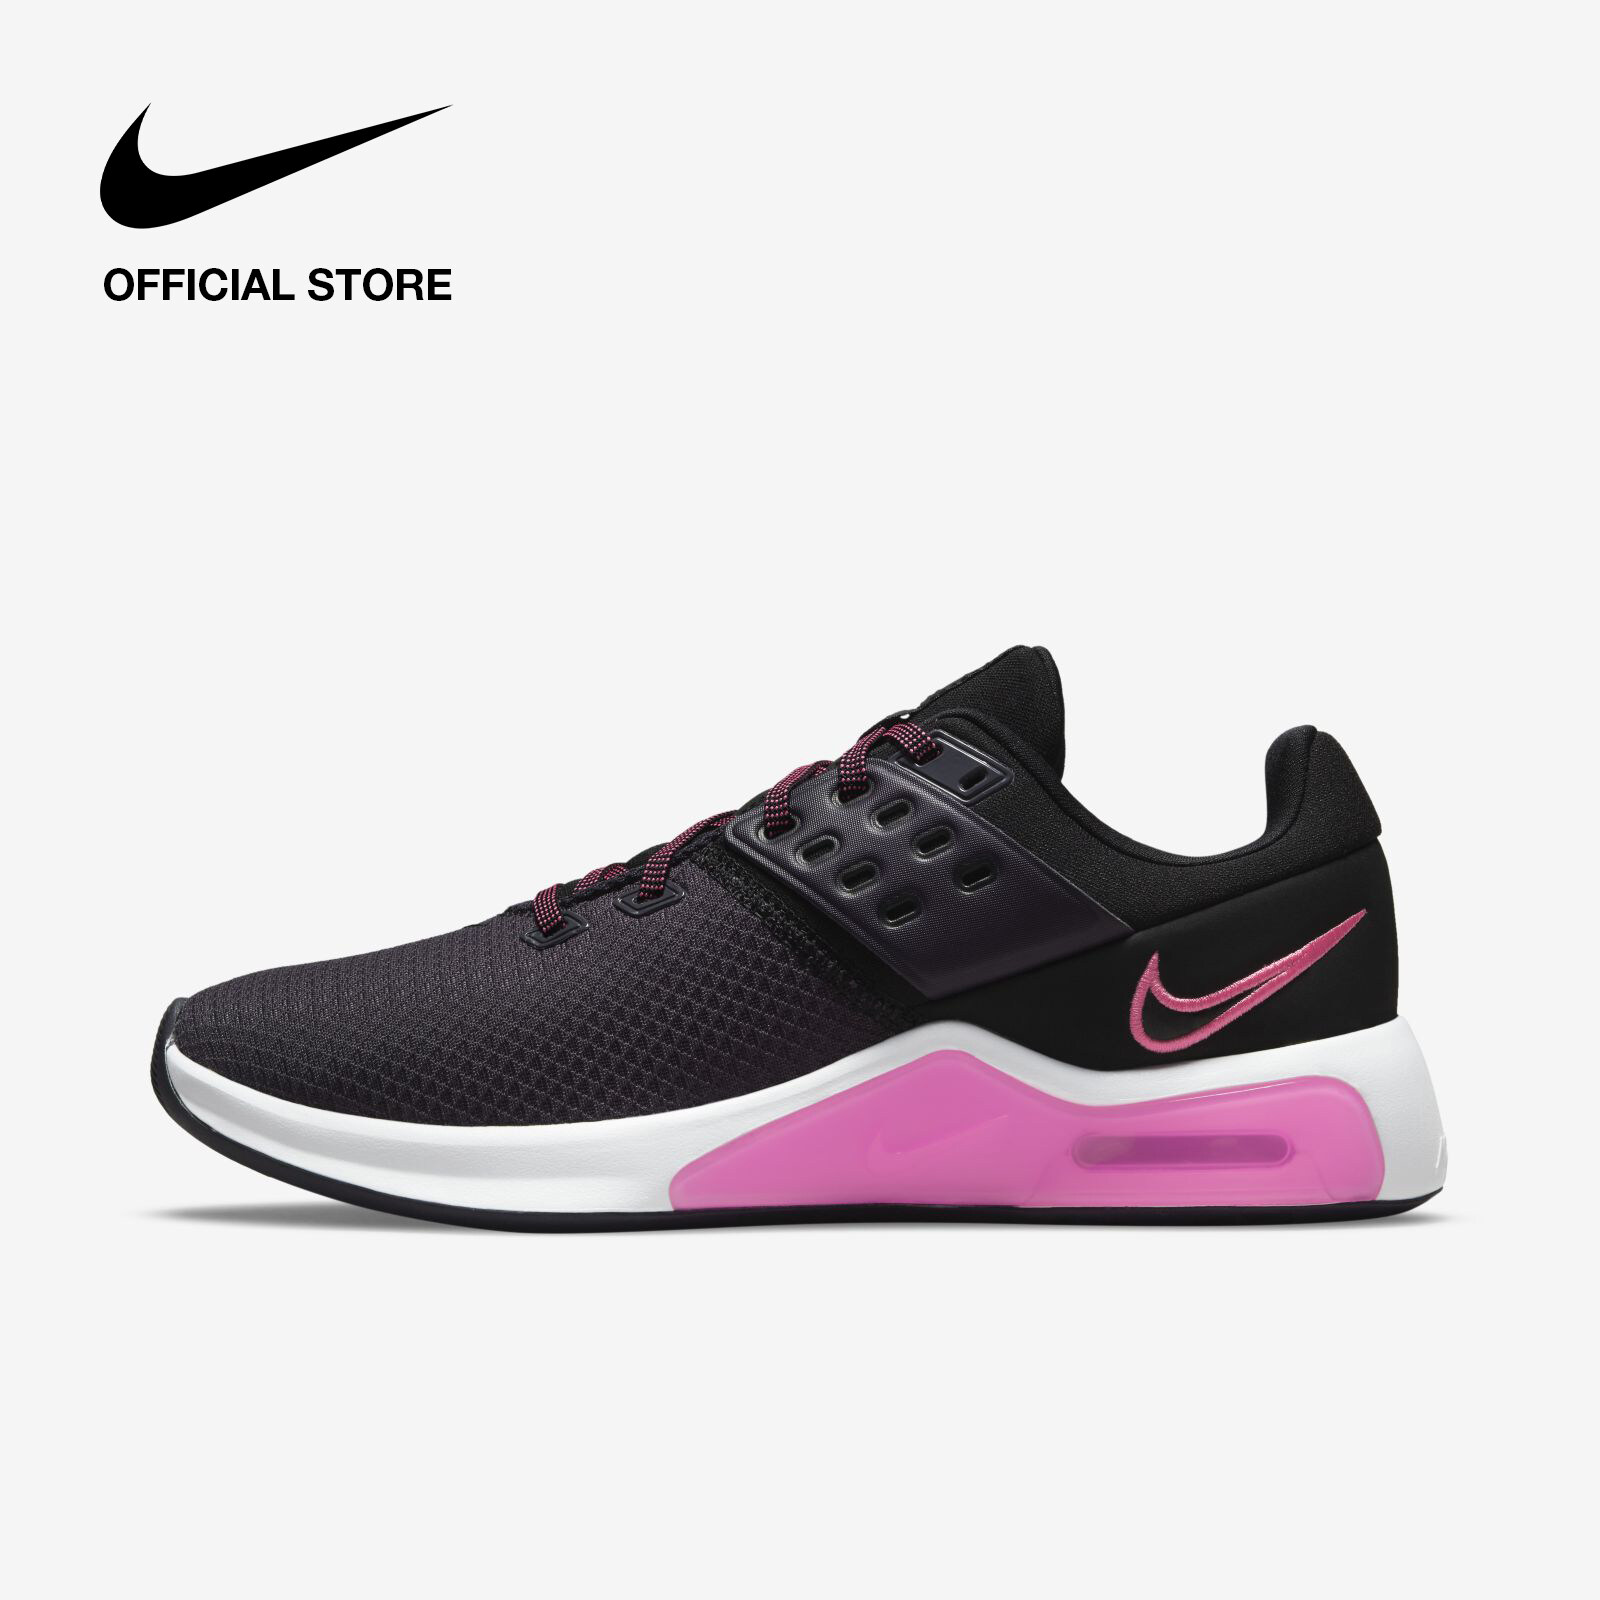 Nike Women's Air Max Bella TR 4 Training Shoes - Black ไนกี้ รองเท้าเทรนนิ่งผู้หญิง แอร์ แม็กซ์ เบลล่า ทีอาร์ 4 - สีดำ